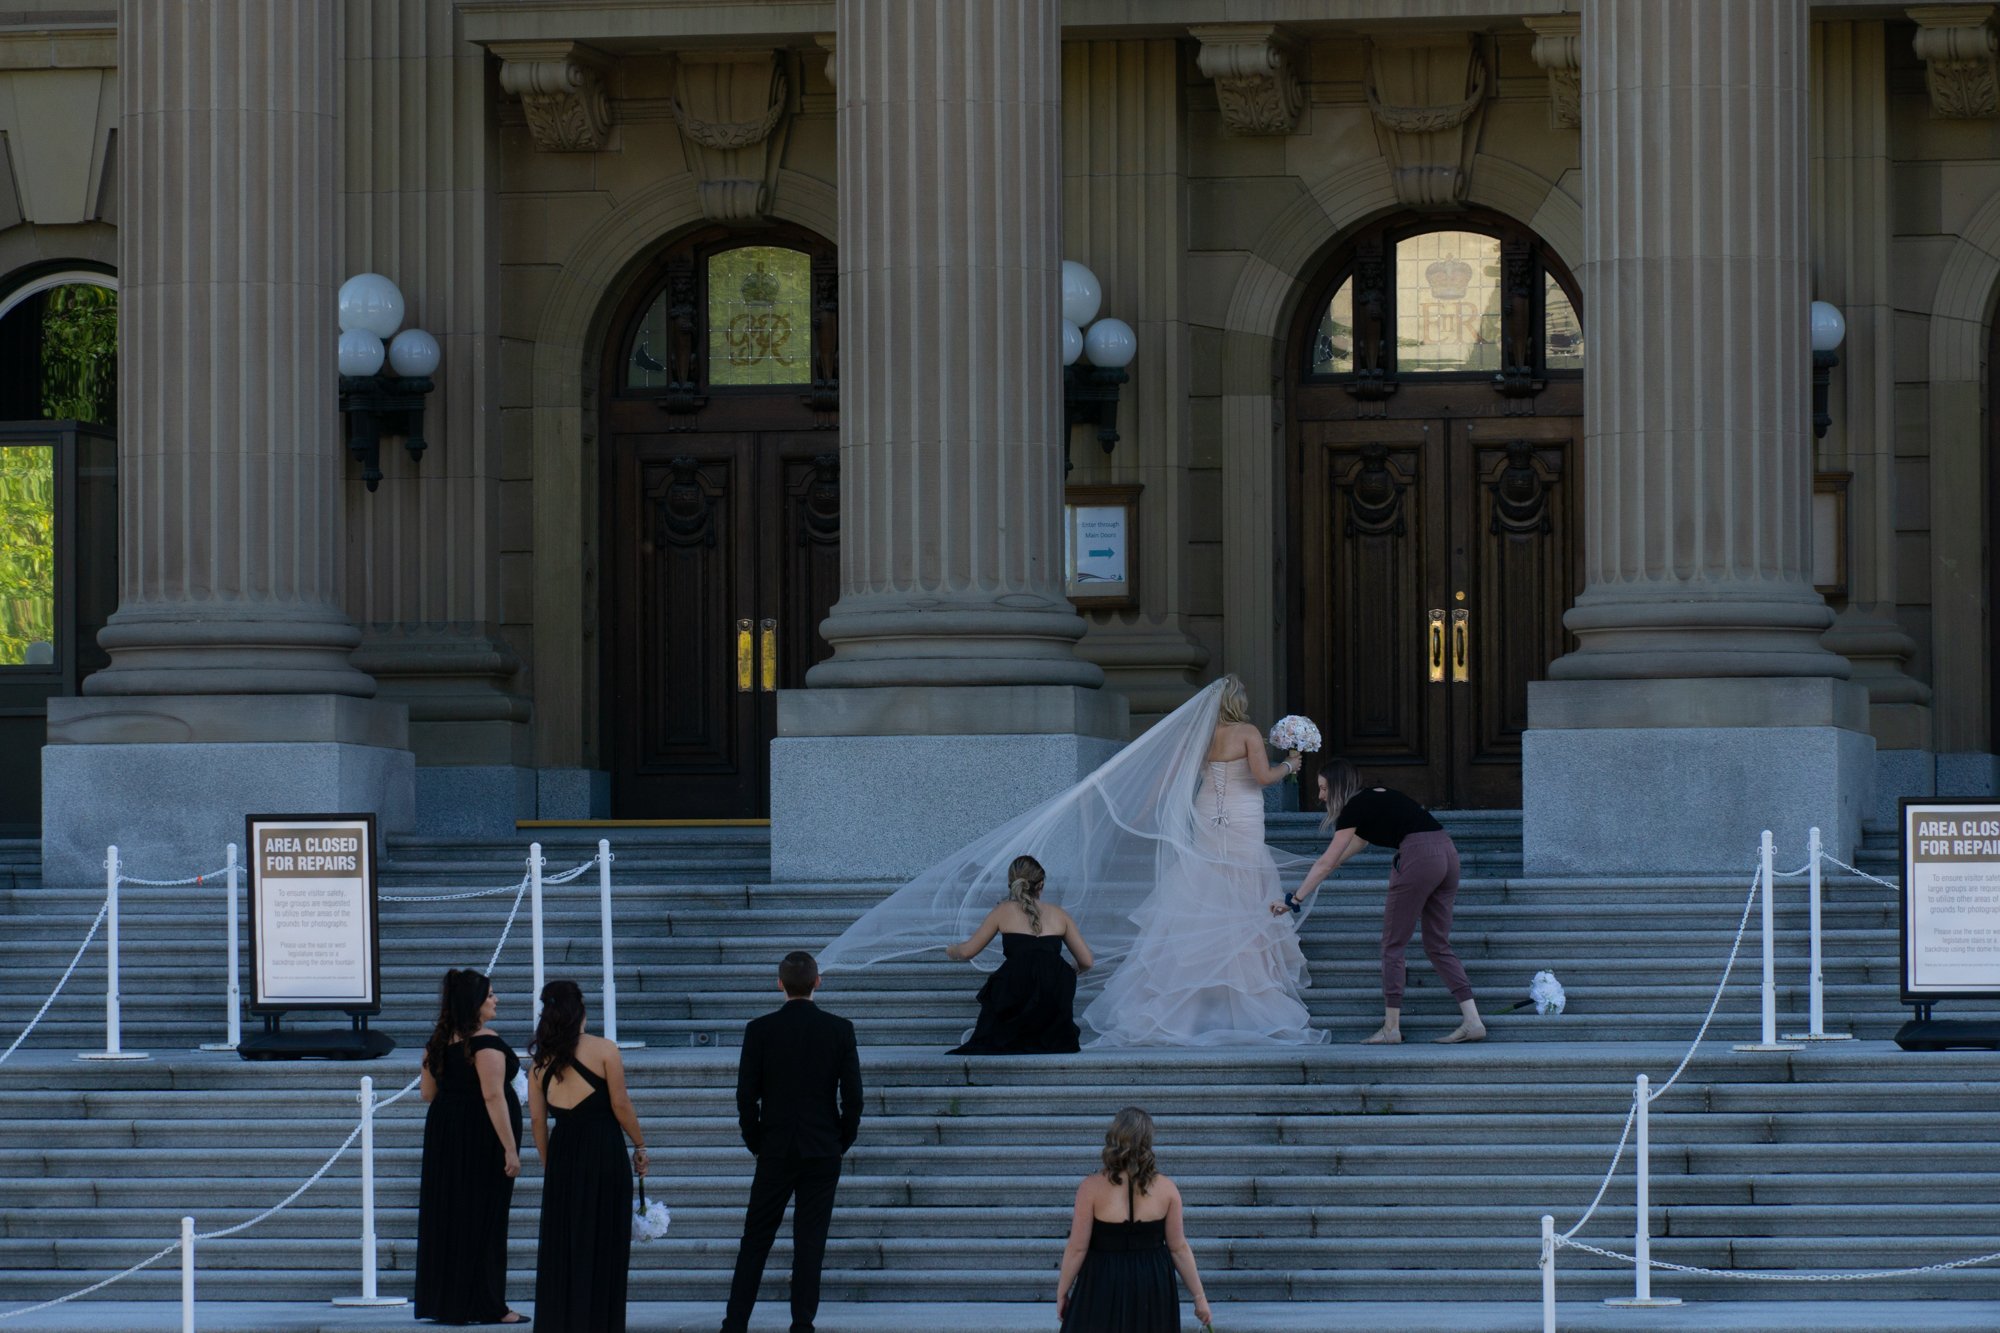 Wedding shots around Alberta Legislature Building in Edmonton, Alberta, Canada